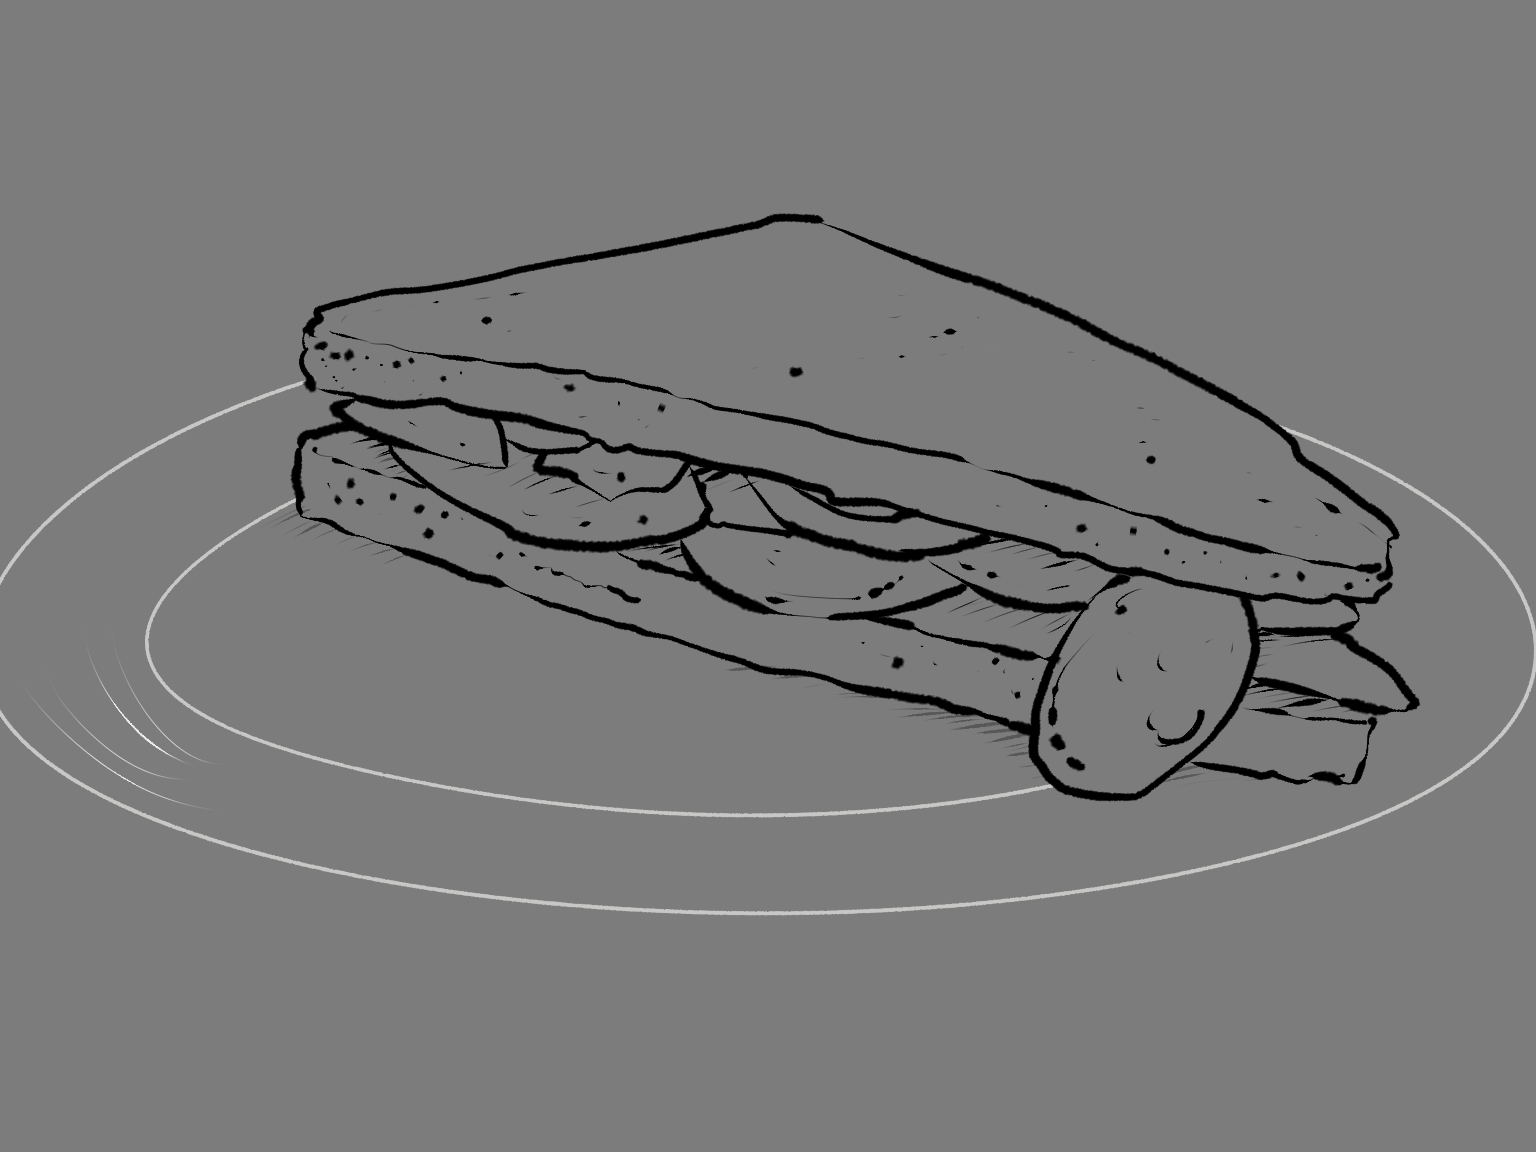 Outline drawing of a triangular crisp sandwich